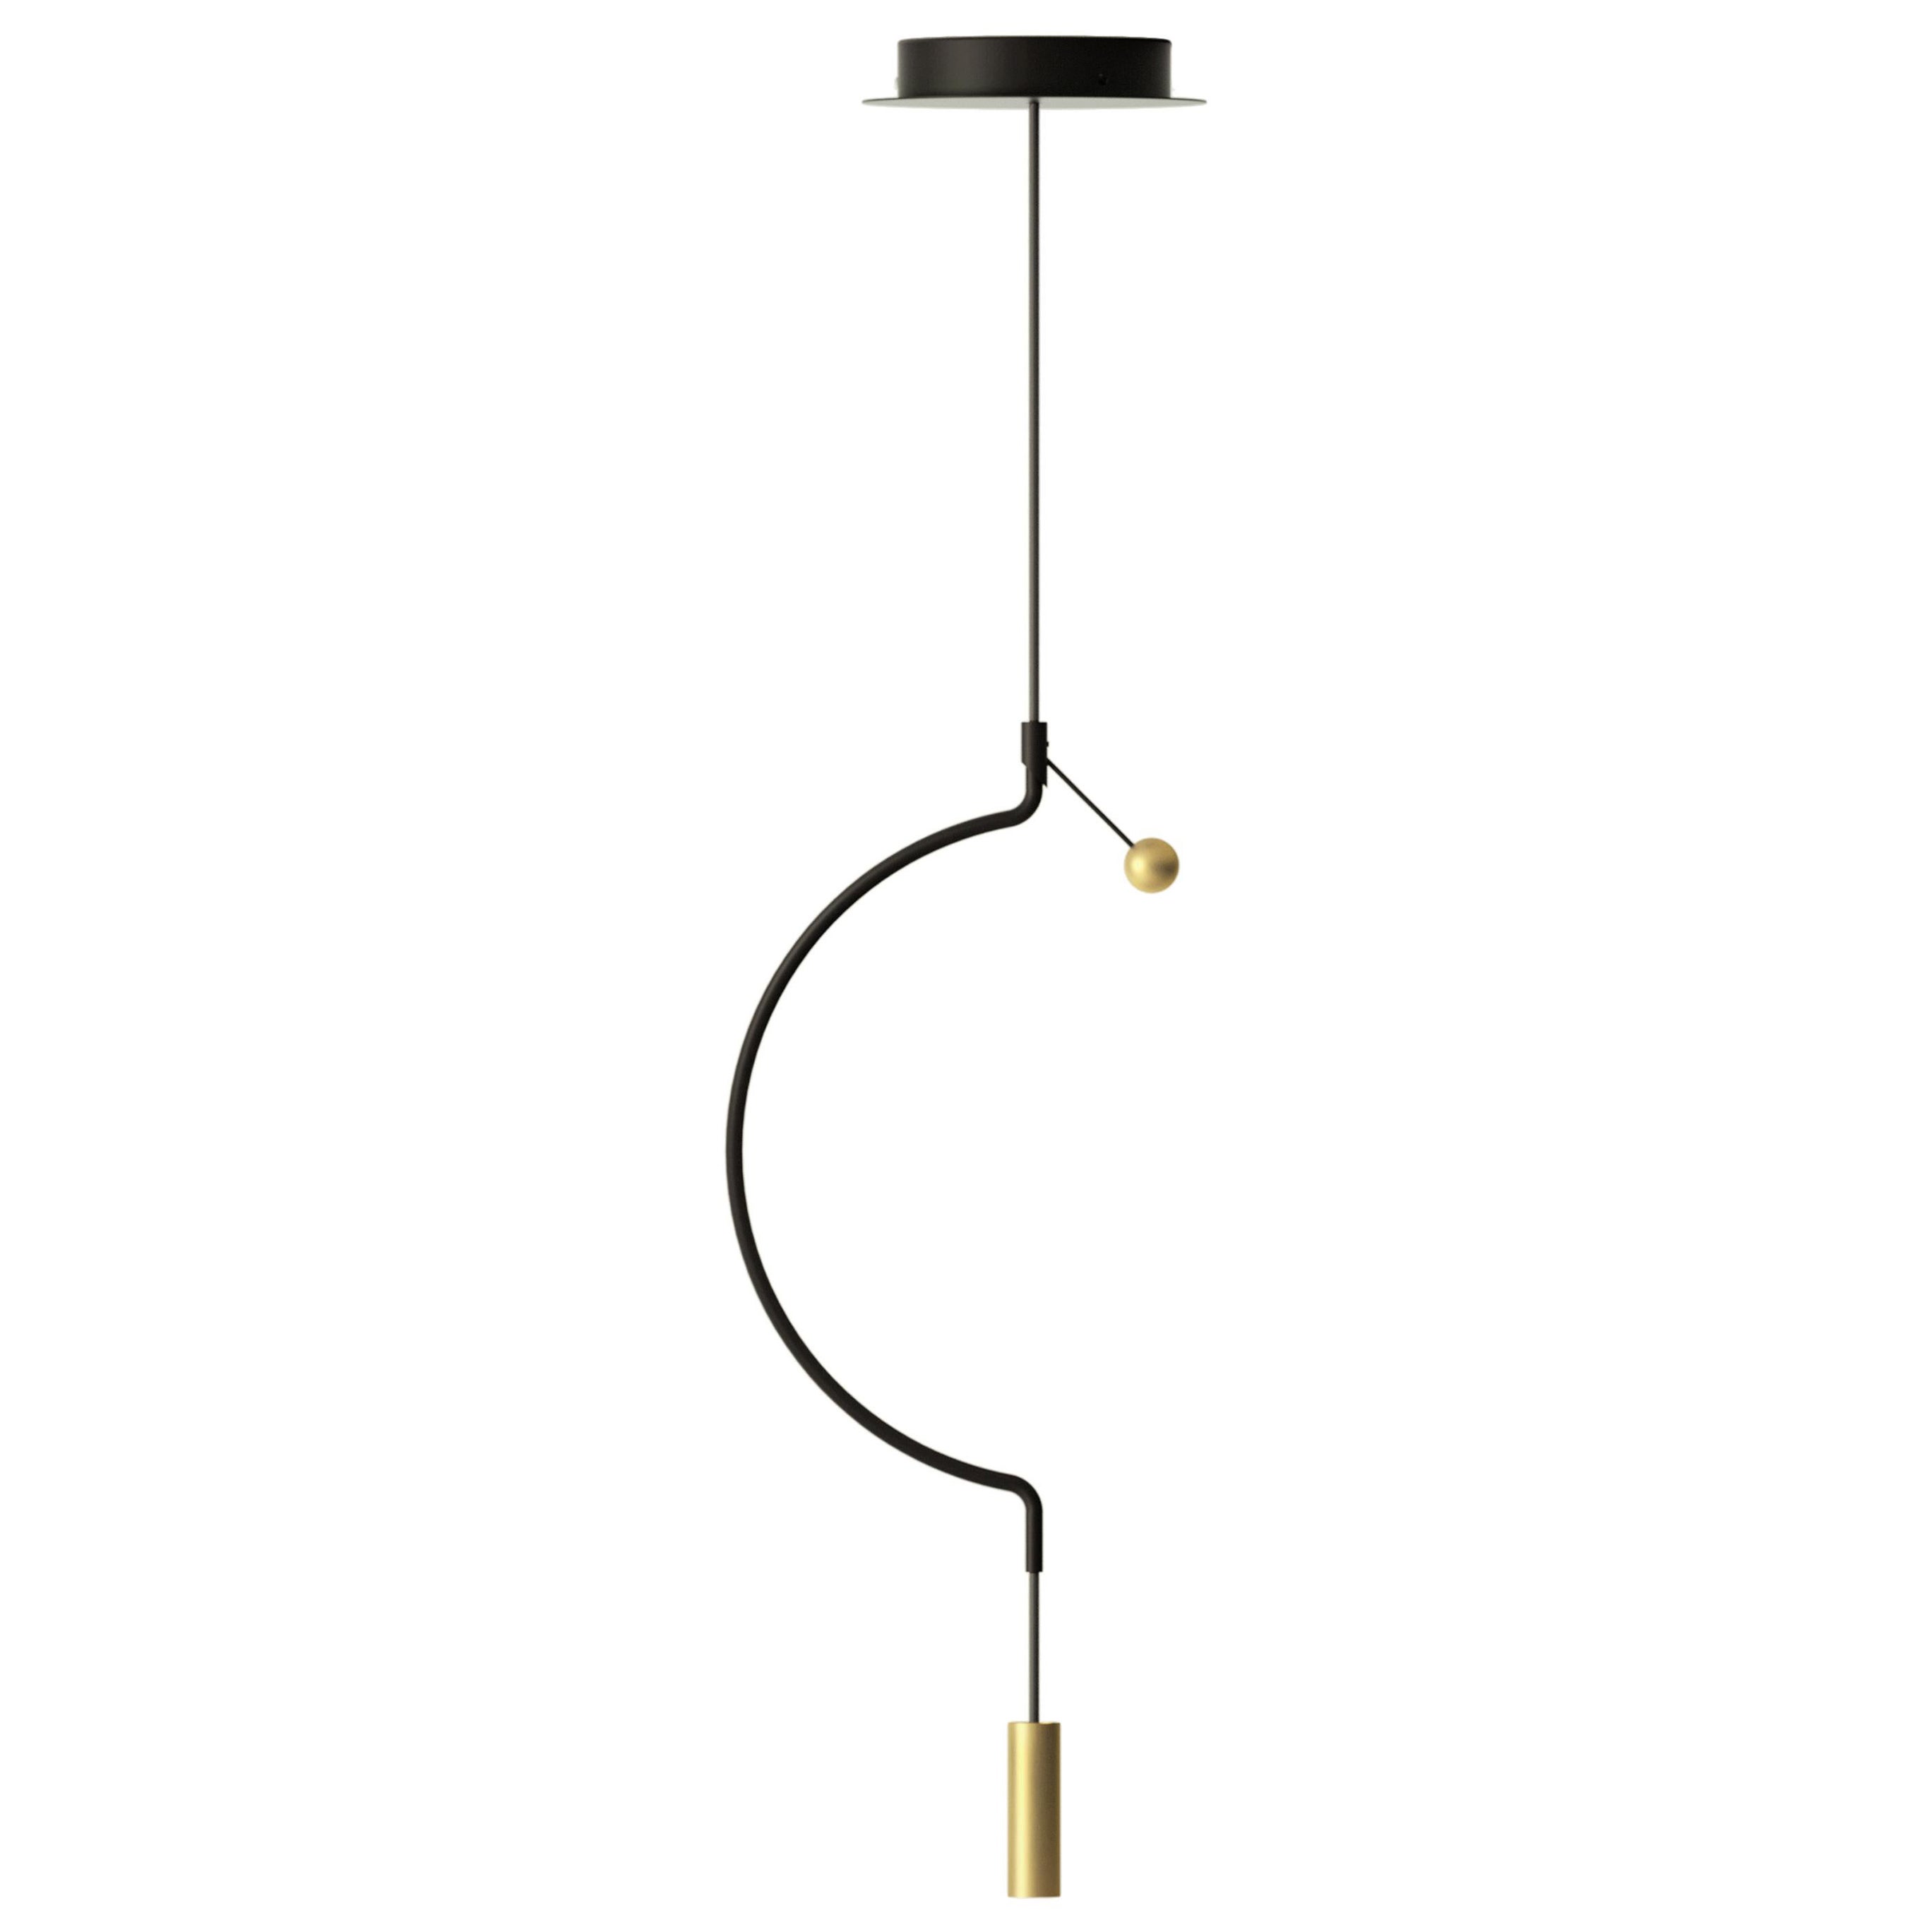 Axolight Liaison Model P1 Pendant Lamp in Black/Gold by Sara Moroni For Sale